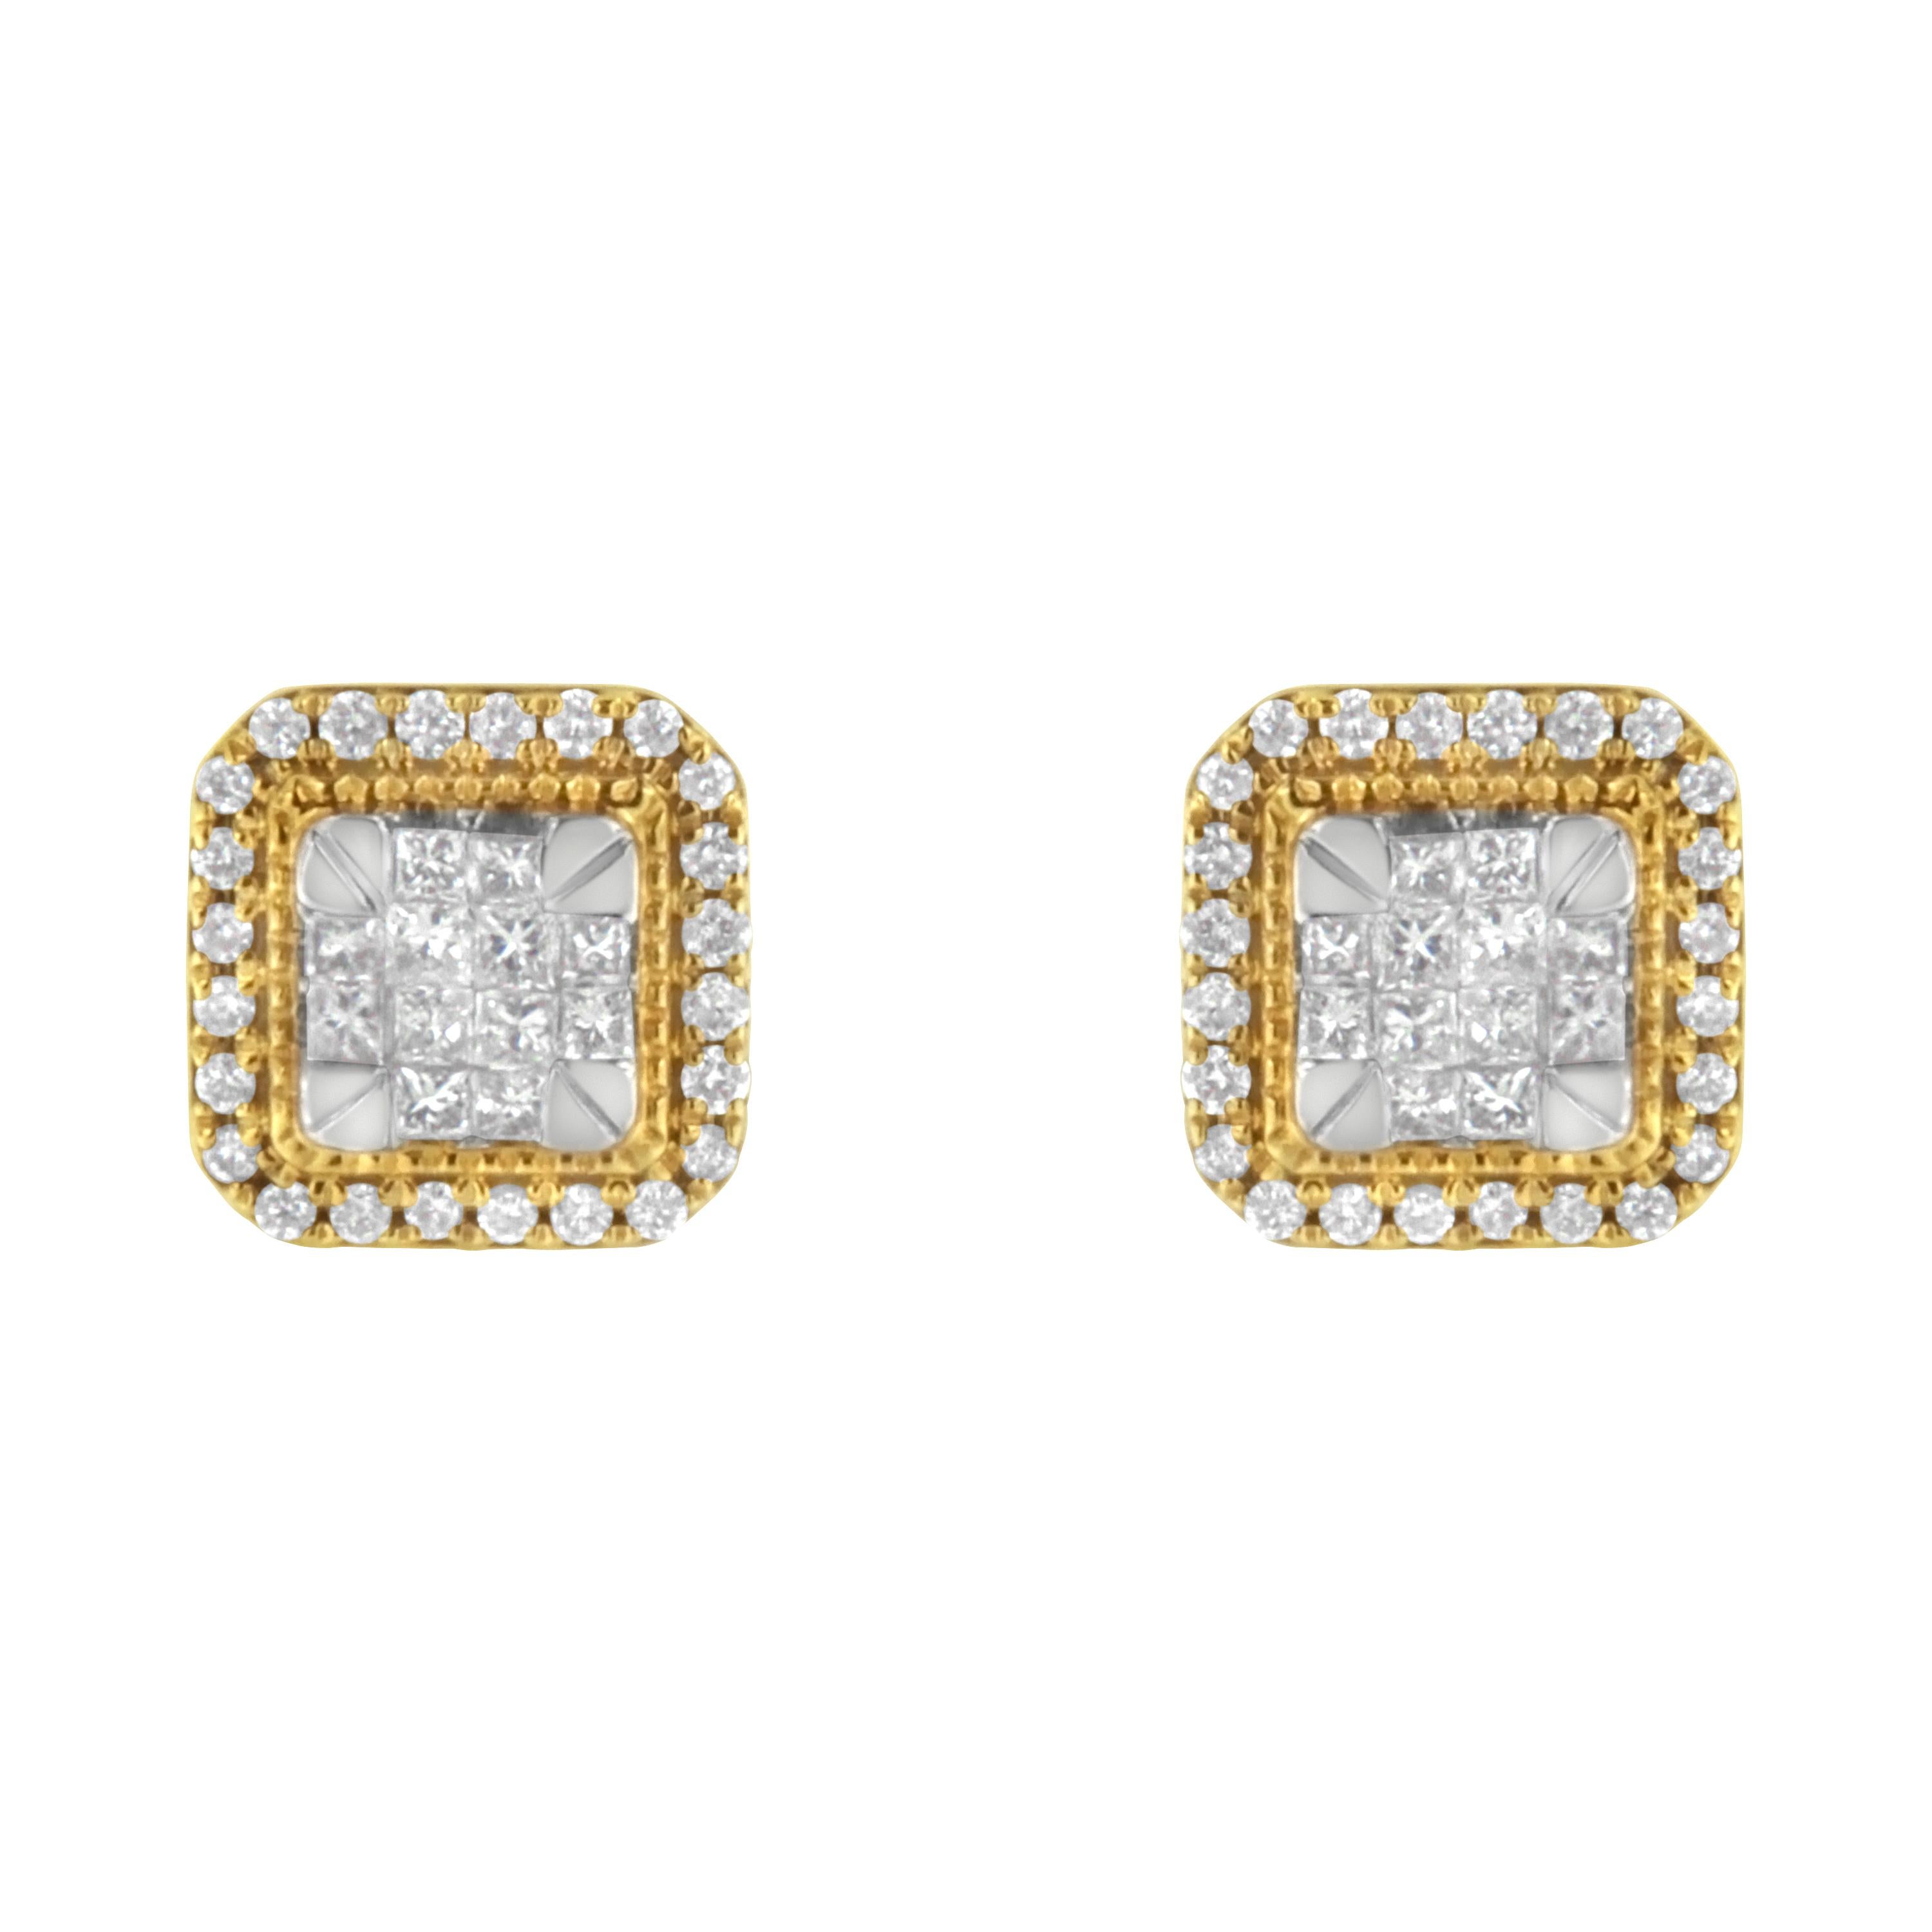 10k yellow gold diamond stud earrings